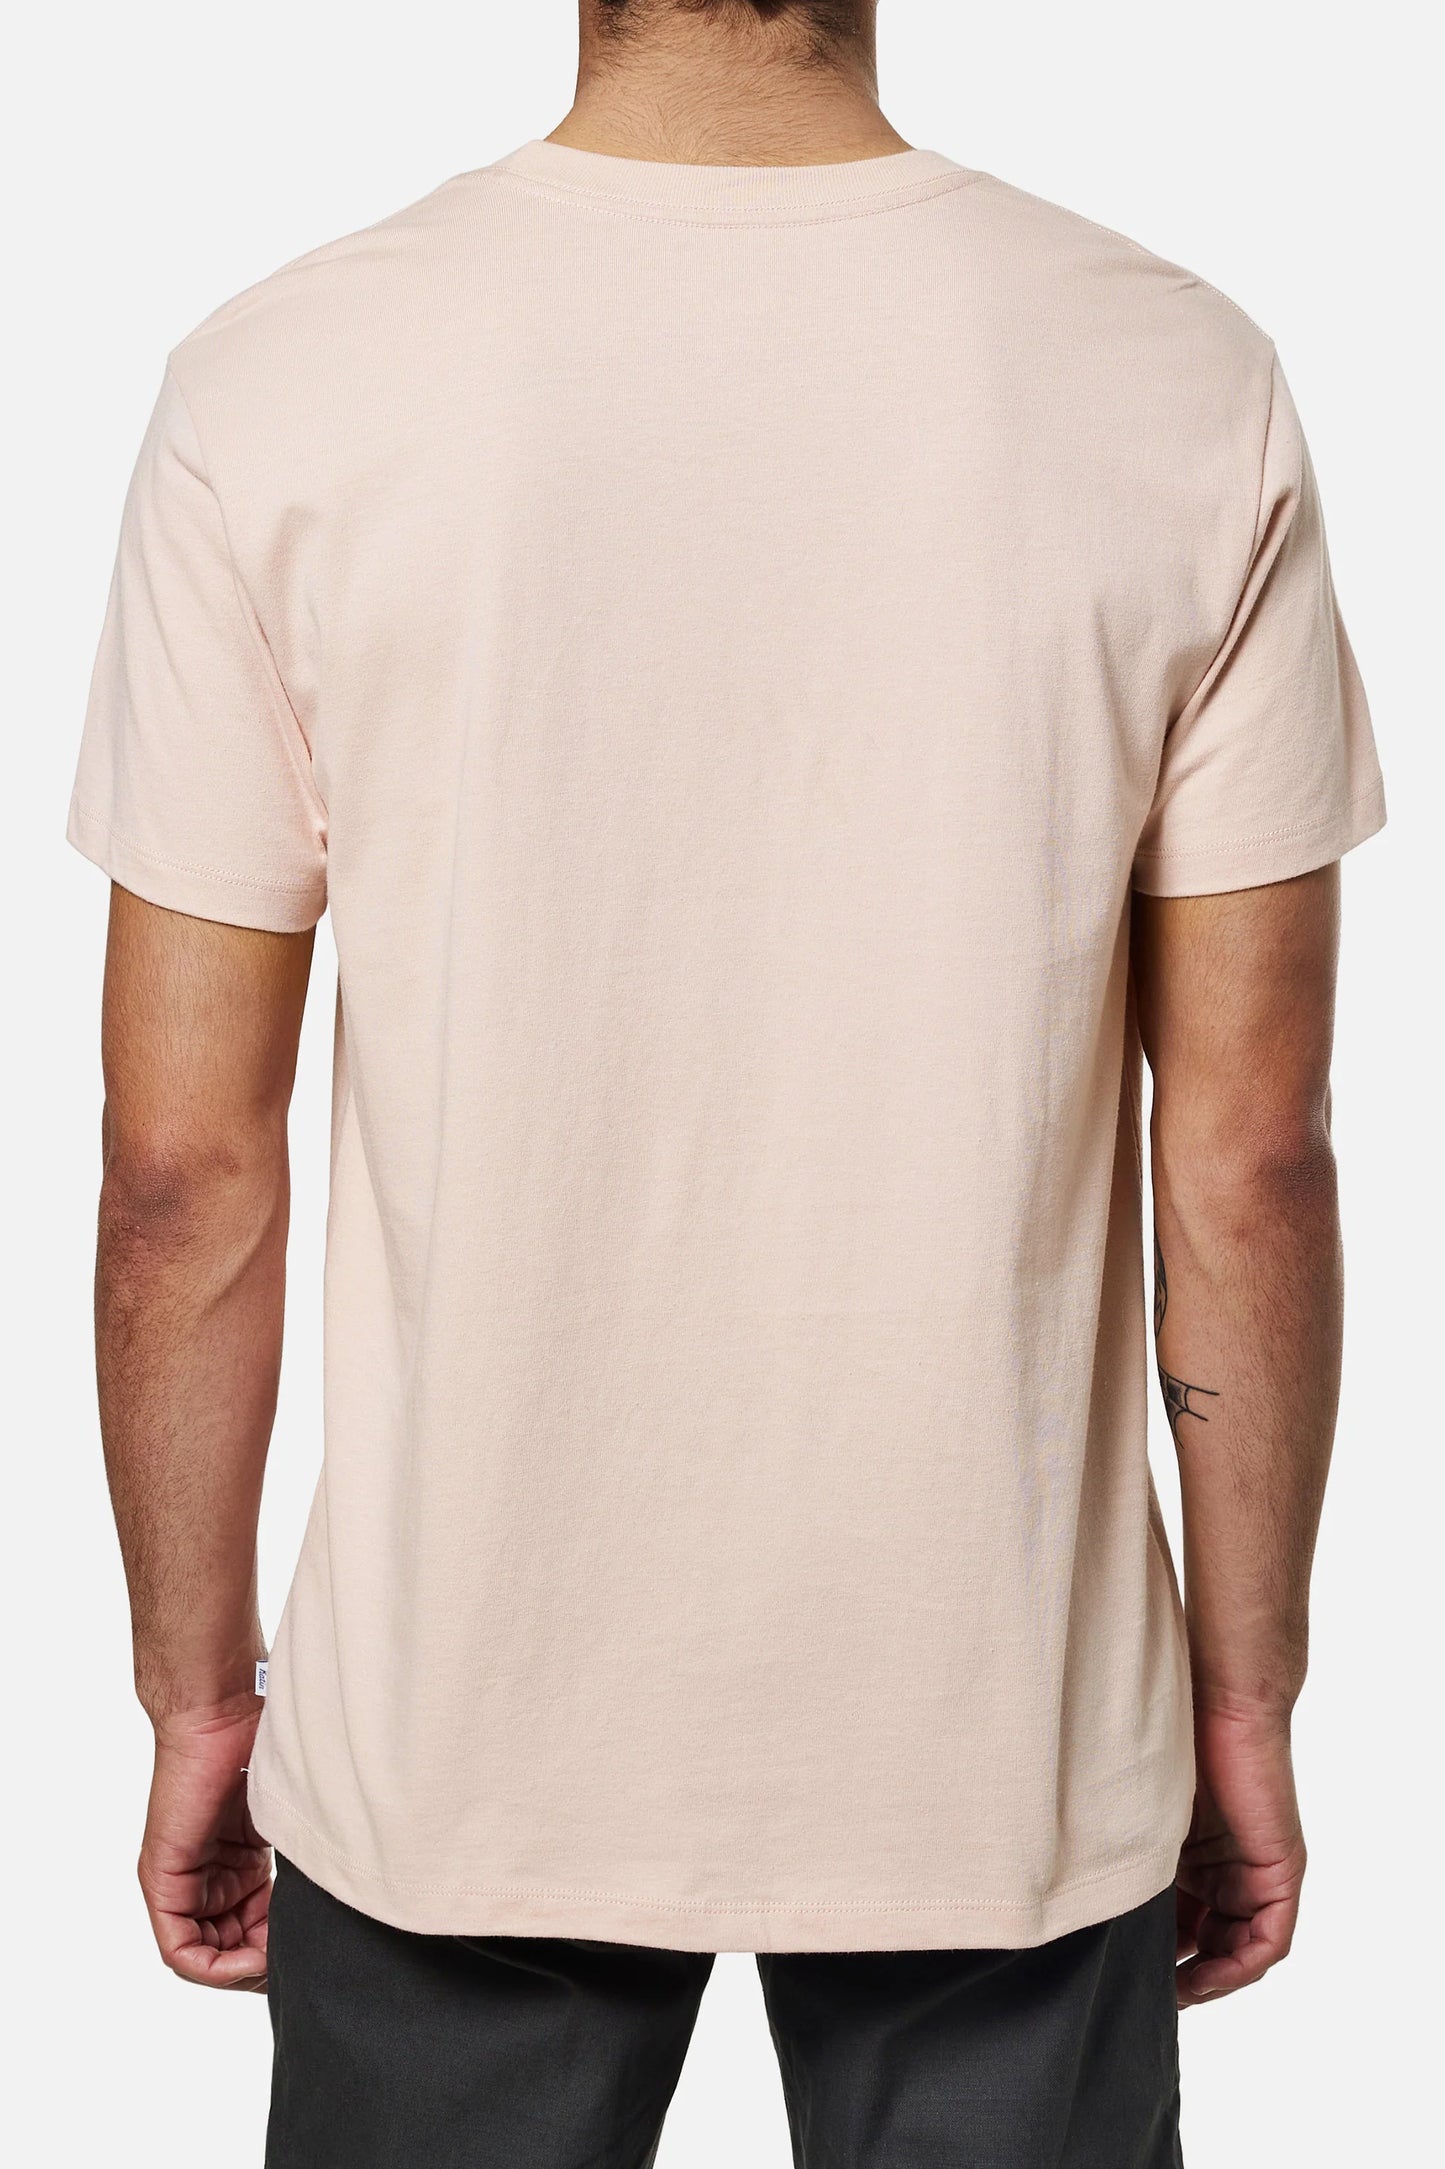 Back view of a man wearing a pink short sleeve pocket t-shirt by Katin